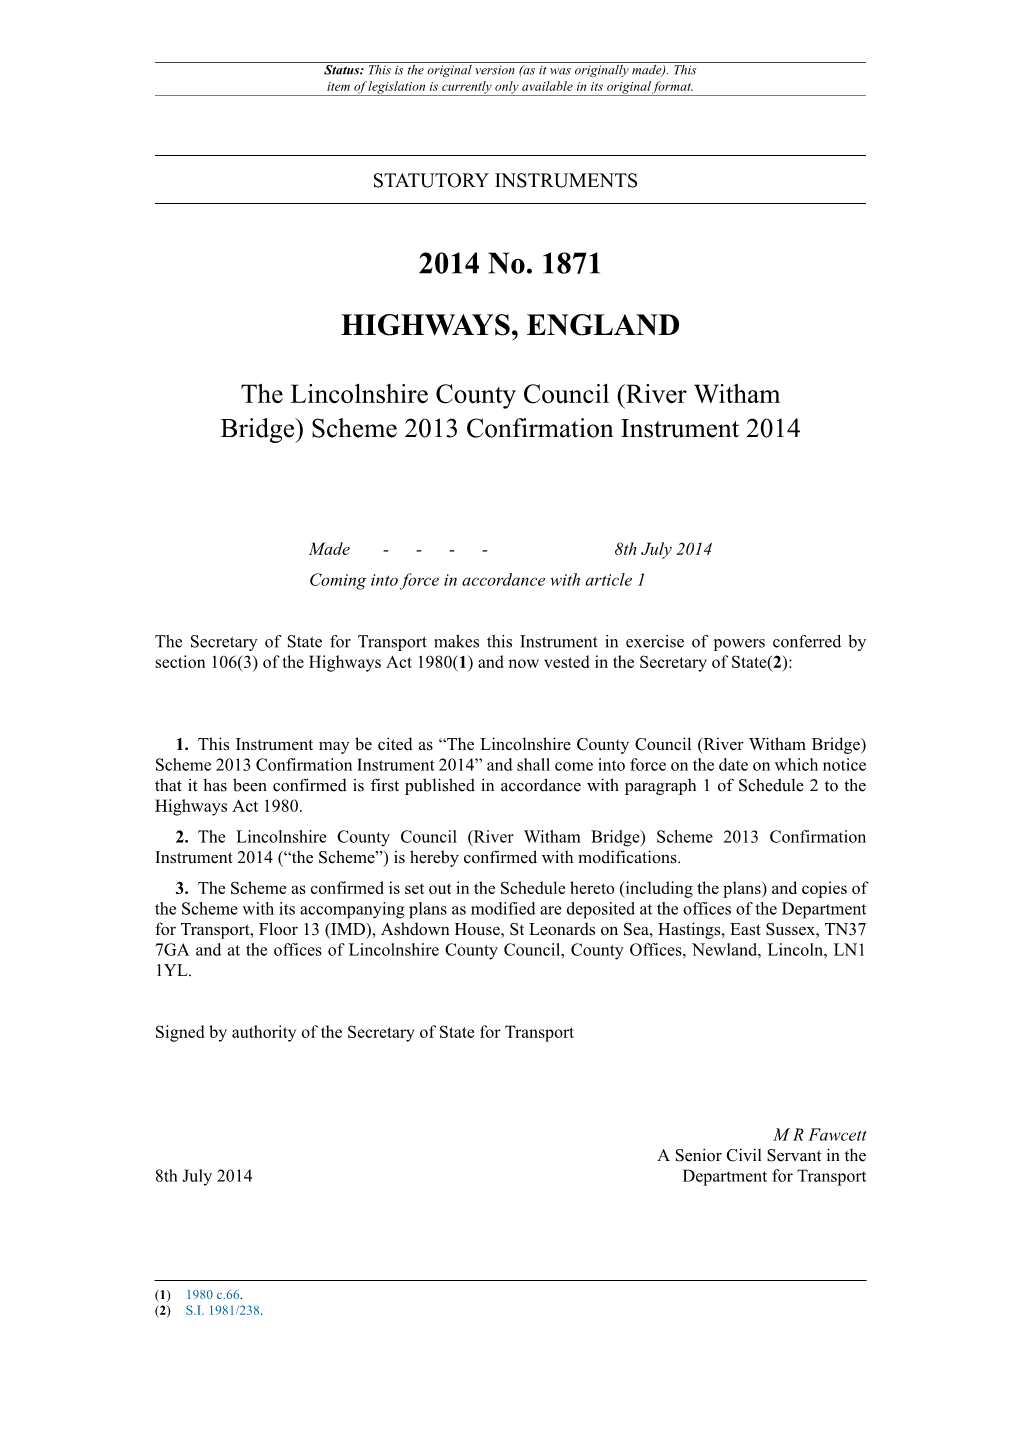 The Lincolnshire County Council (River Witham Bridge) Scheme 2013 Confirmation Instrument 2014